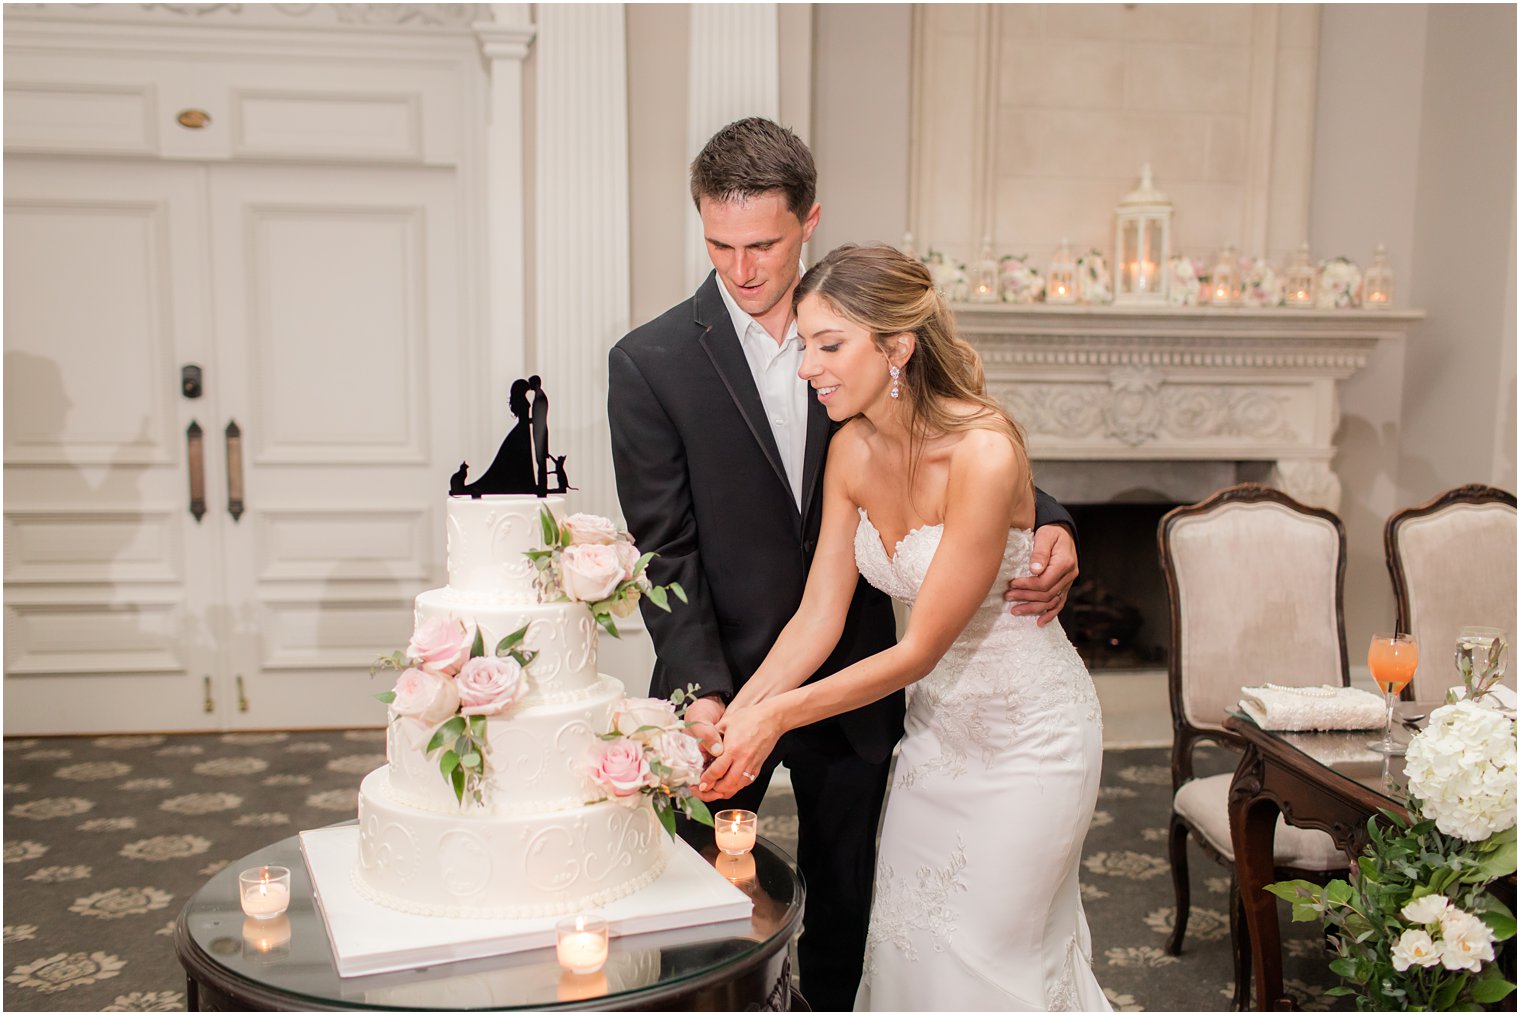 bride and groom cut wedding cake during Florham NJ wedding reception